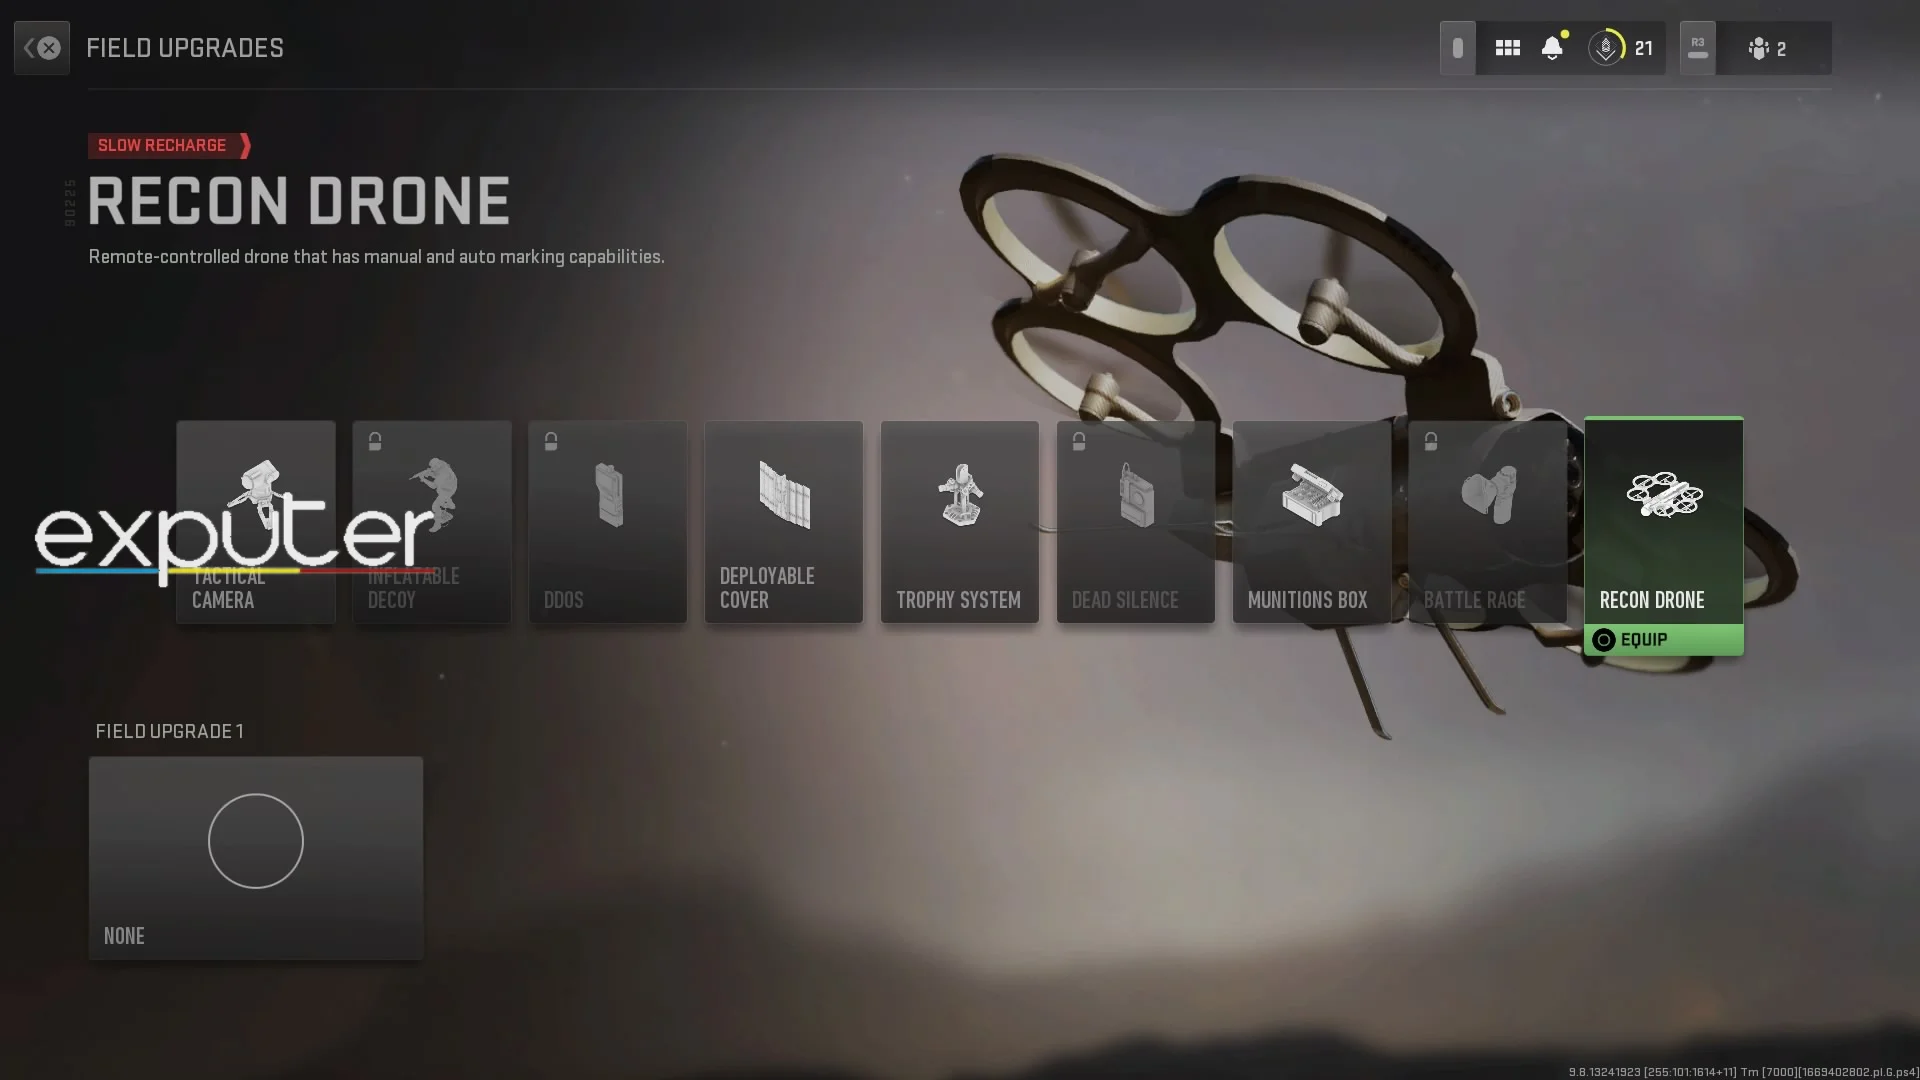 Recon drone item description